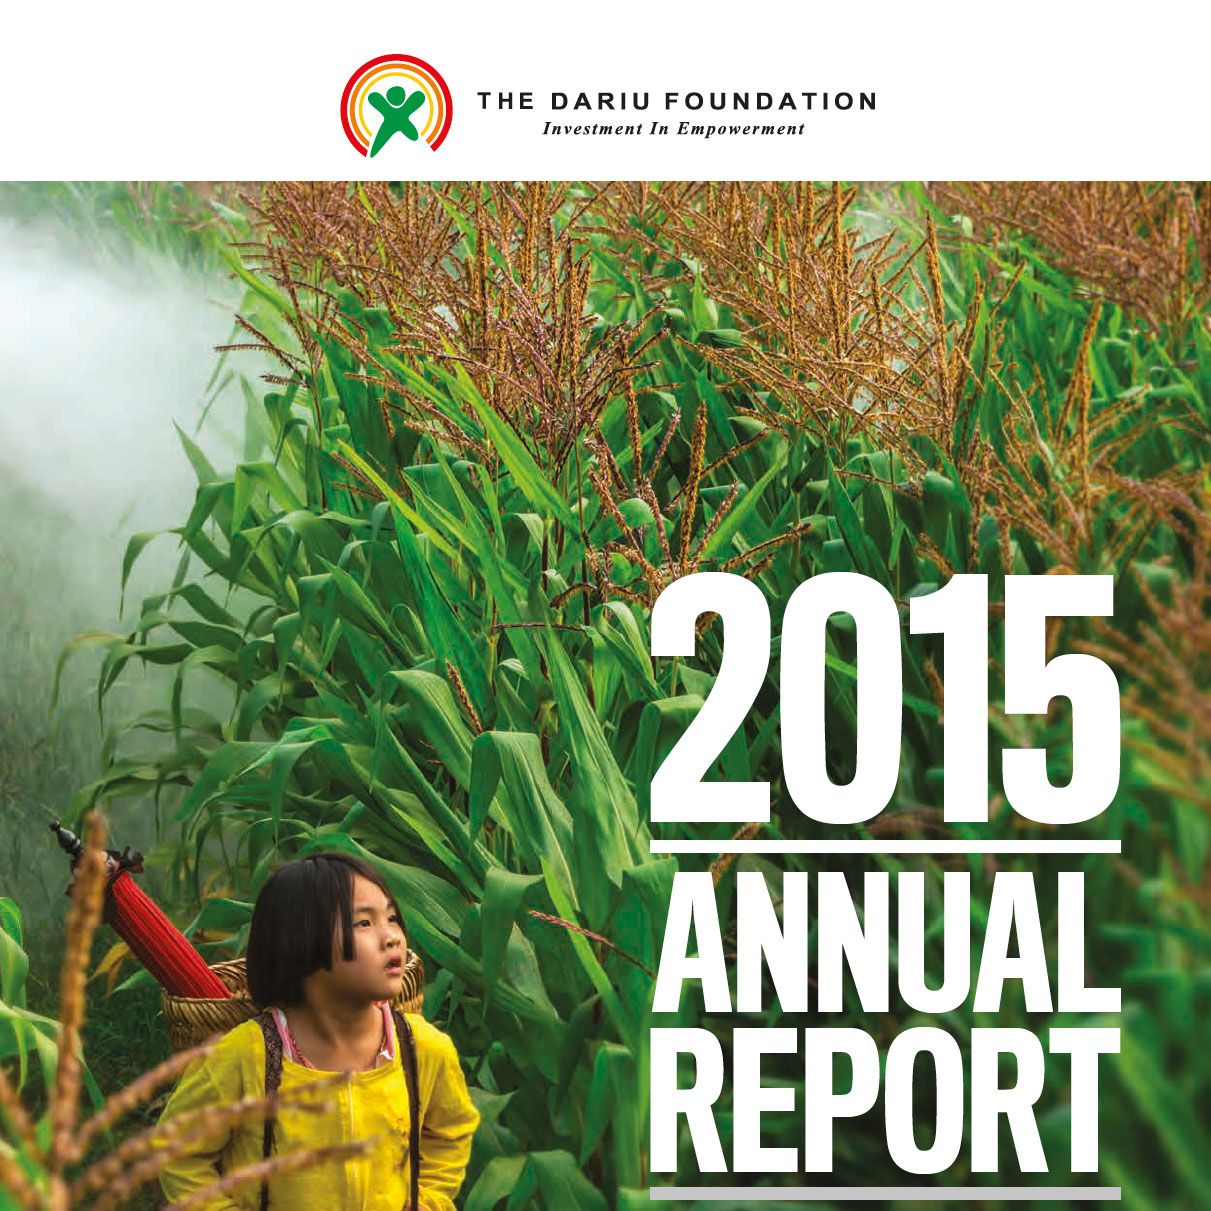 Dariu Foundation - Jahresbericht - 2015